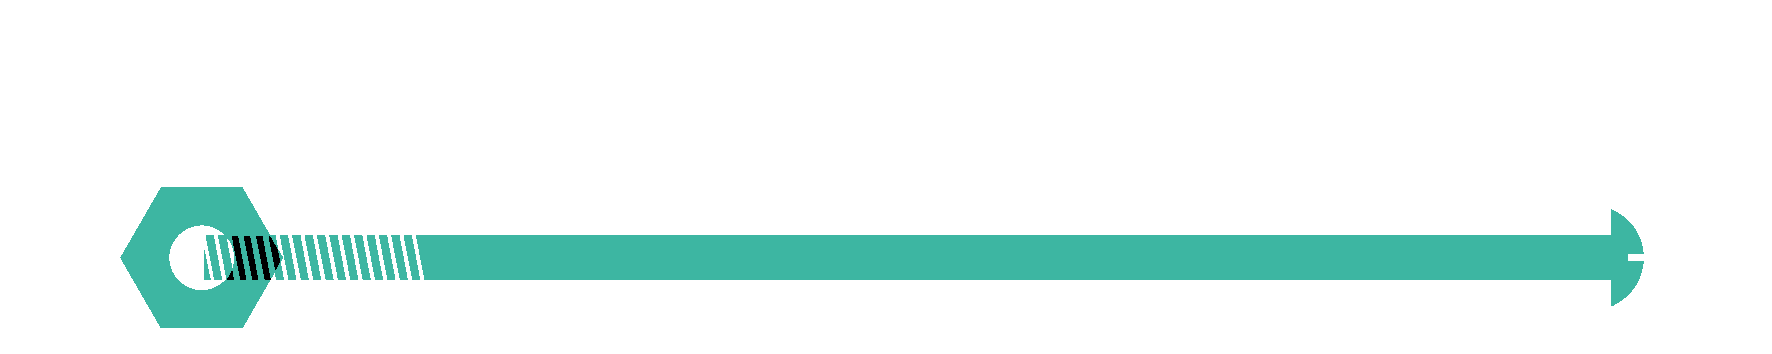 Gråsten sand og grus logo